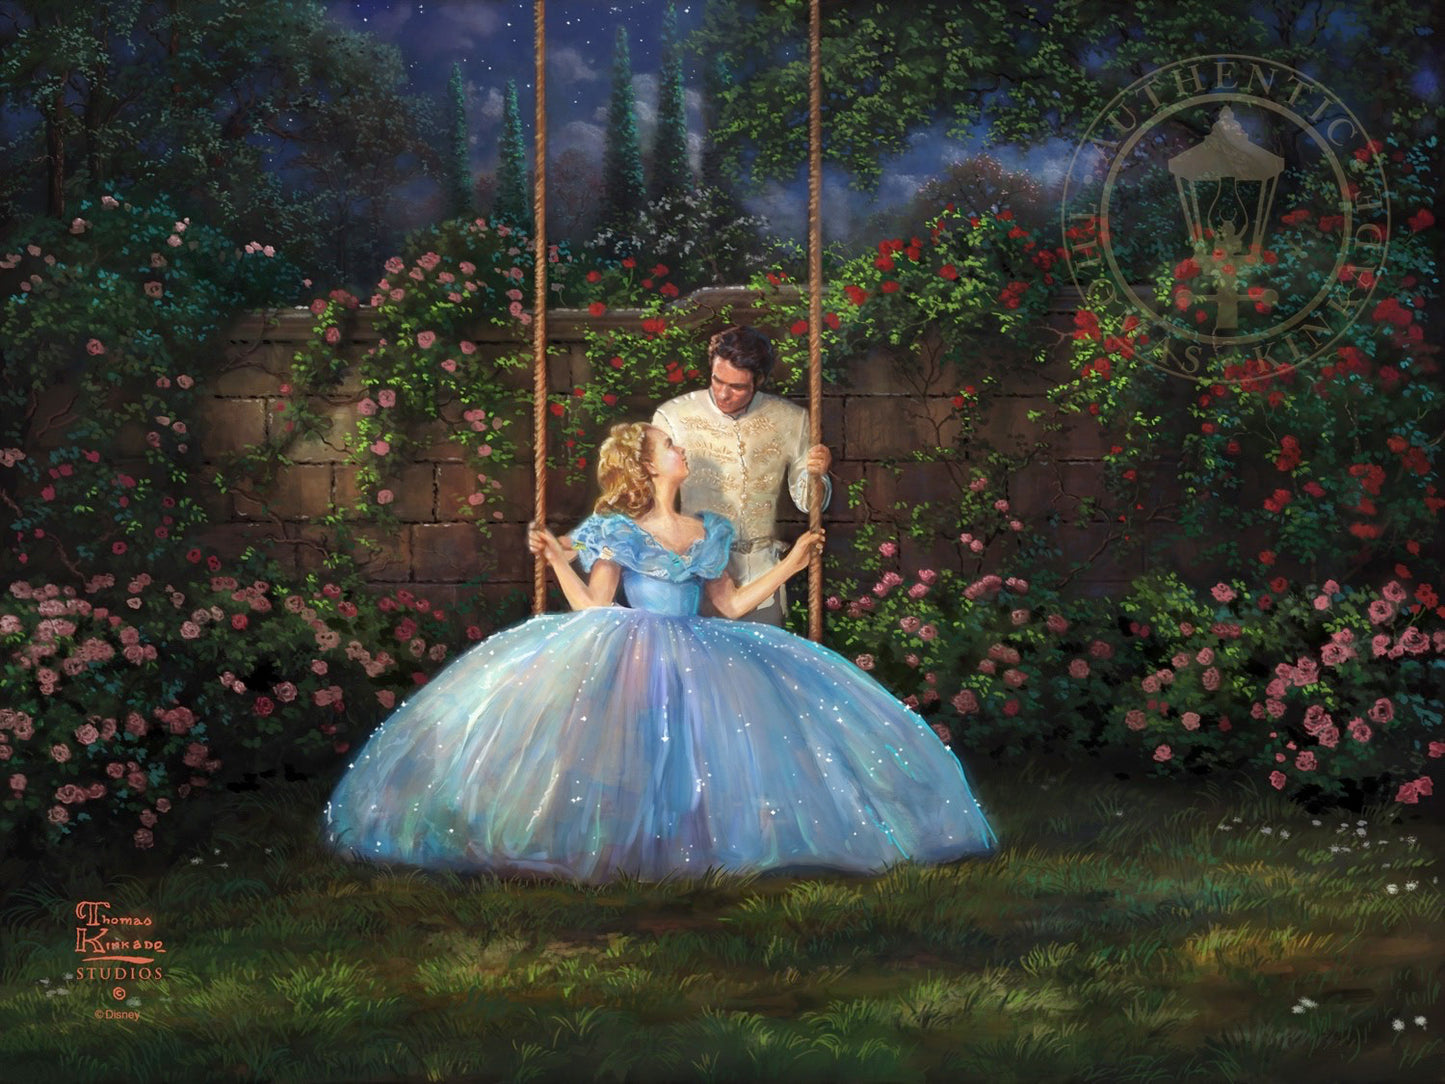 Thomas Kinkade Disney Dreams "Dreams Come True" Limited and Open Canvas Giclee